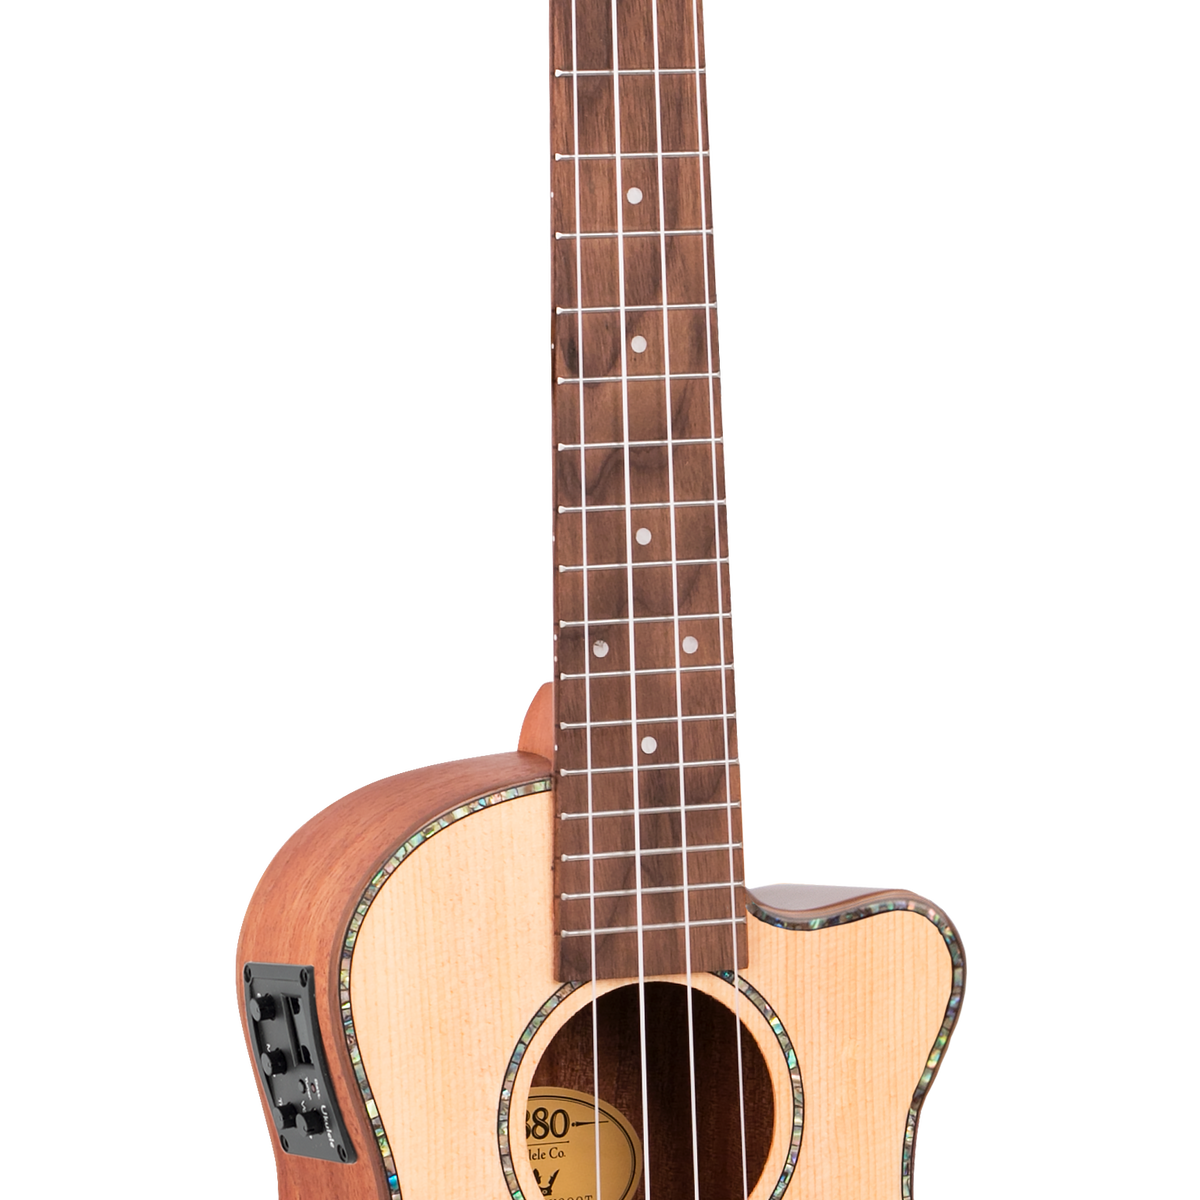 Tenor electric acoustic cutaway ukulele spruce top